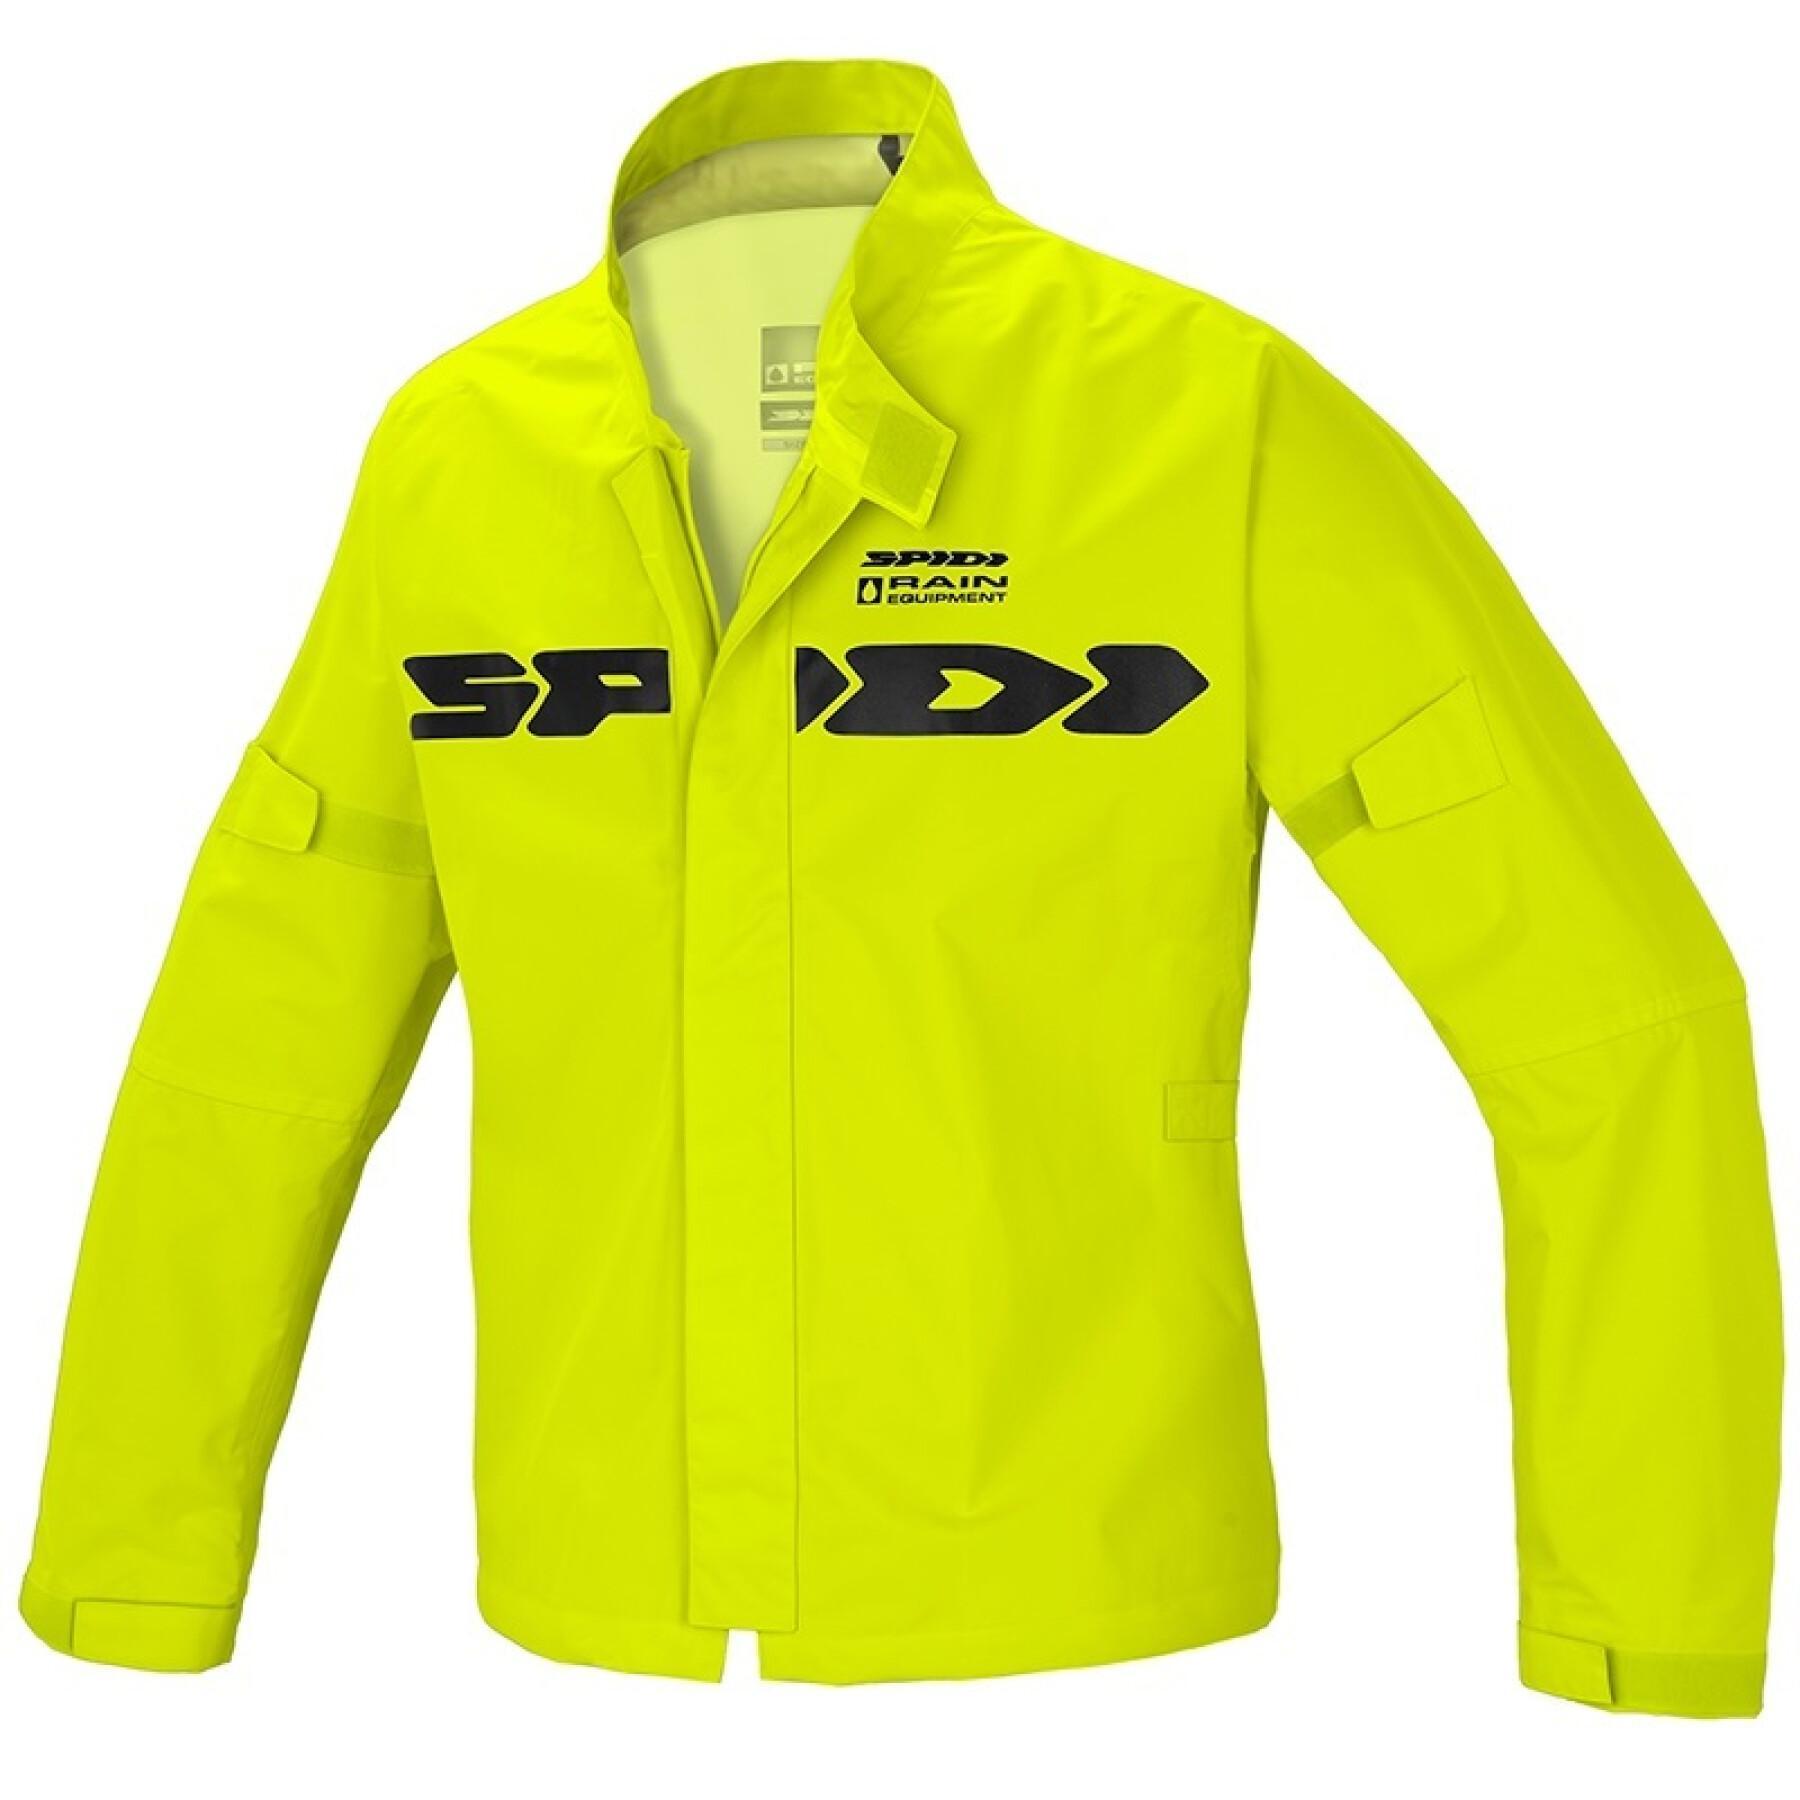 Motorcycle rain jacket Spidi sport